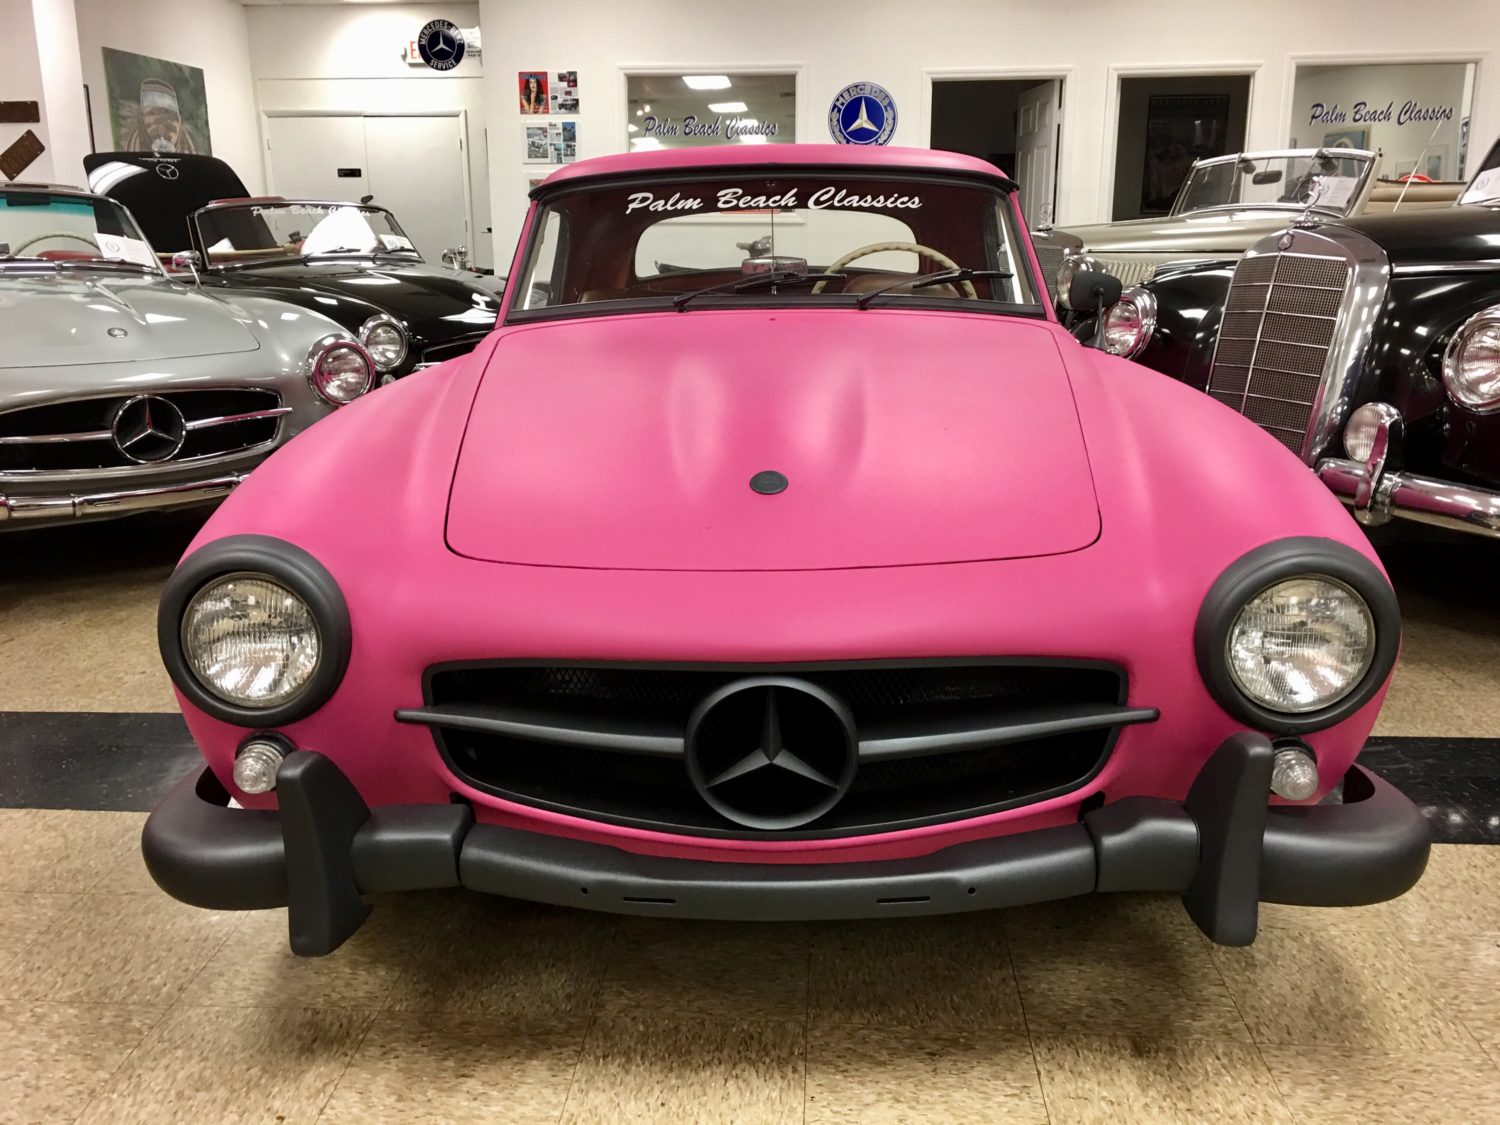 pink 190sl classic_8520 – Palm Beach Classics